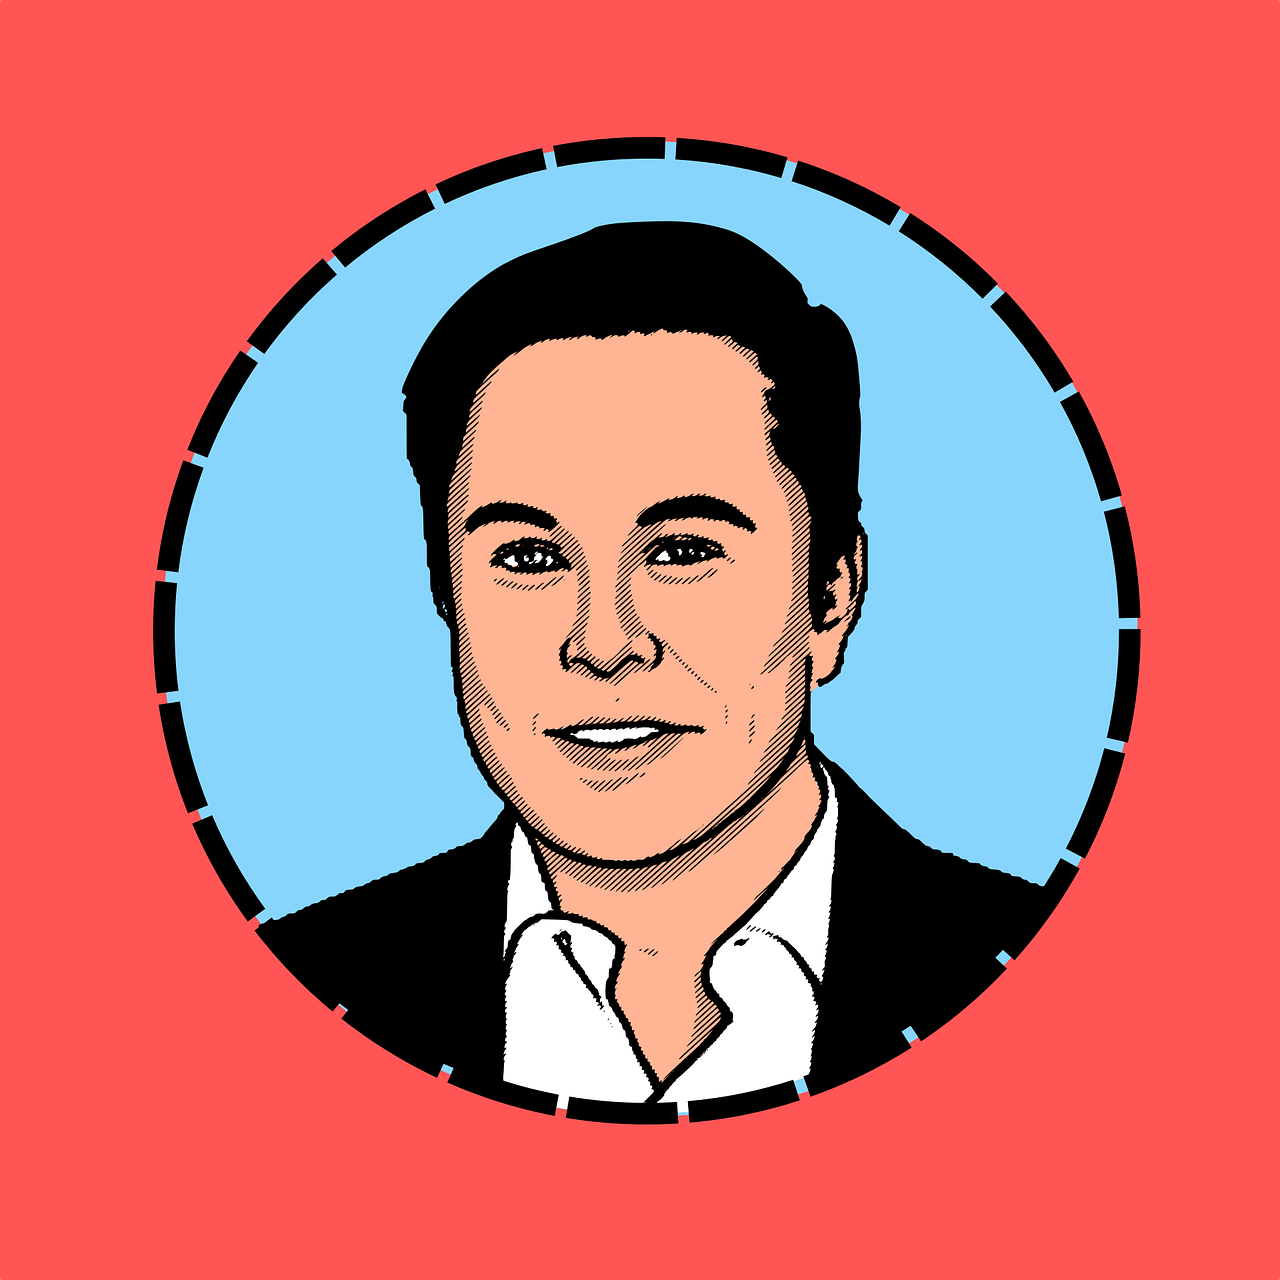 Elon Musk comments on accusations towards Hans Niemann